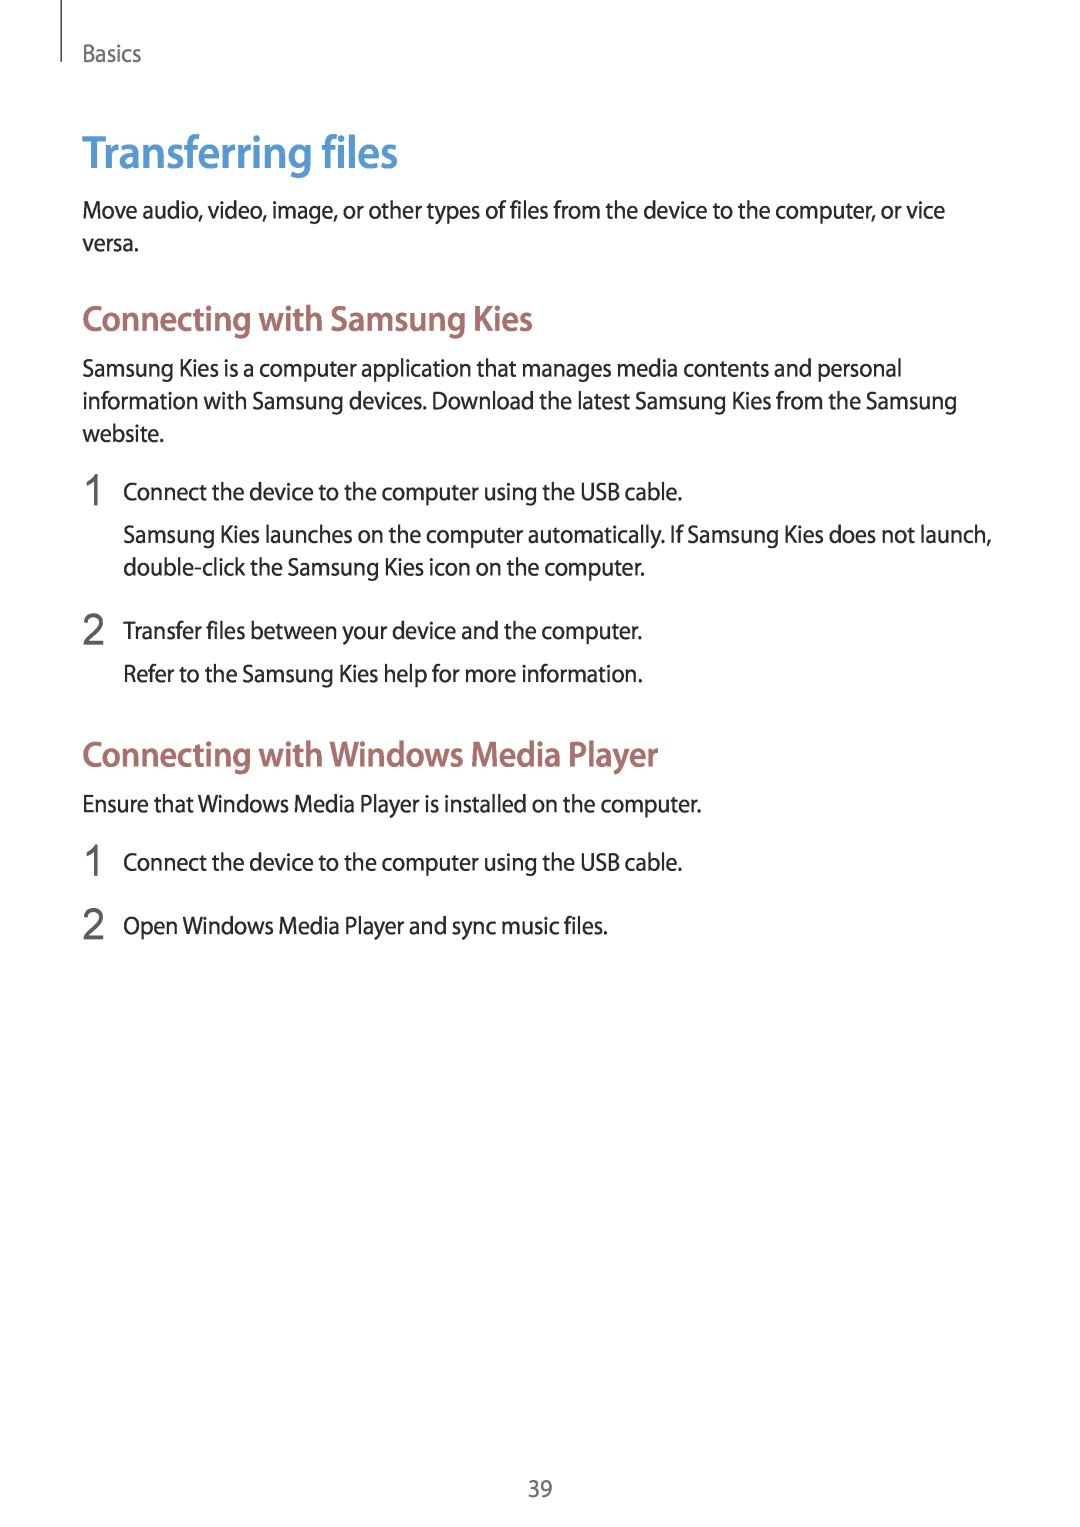 Samsung SM-T3150ZWAMAX Transferring files, Connecting with Samsung Kies, Connecting with Windows Media Player, Basics 